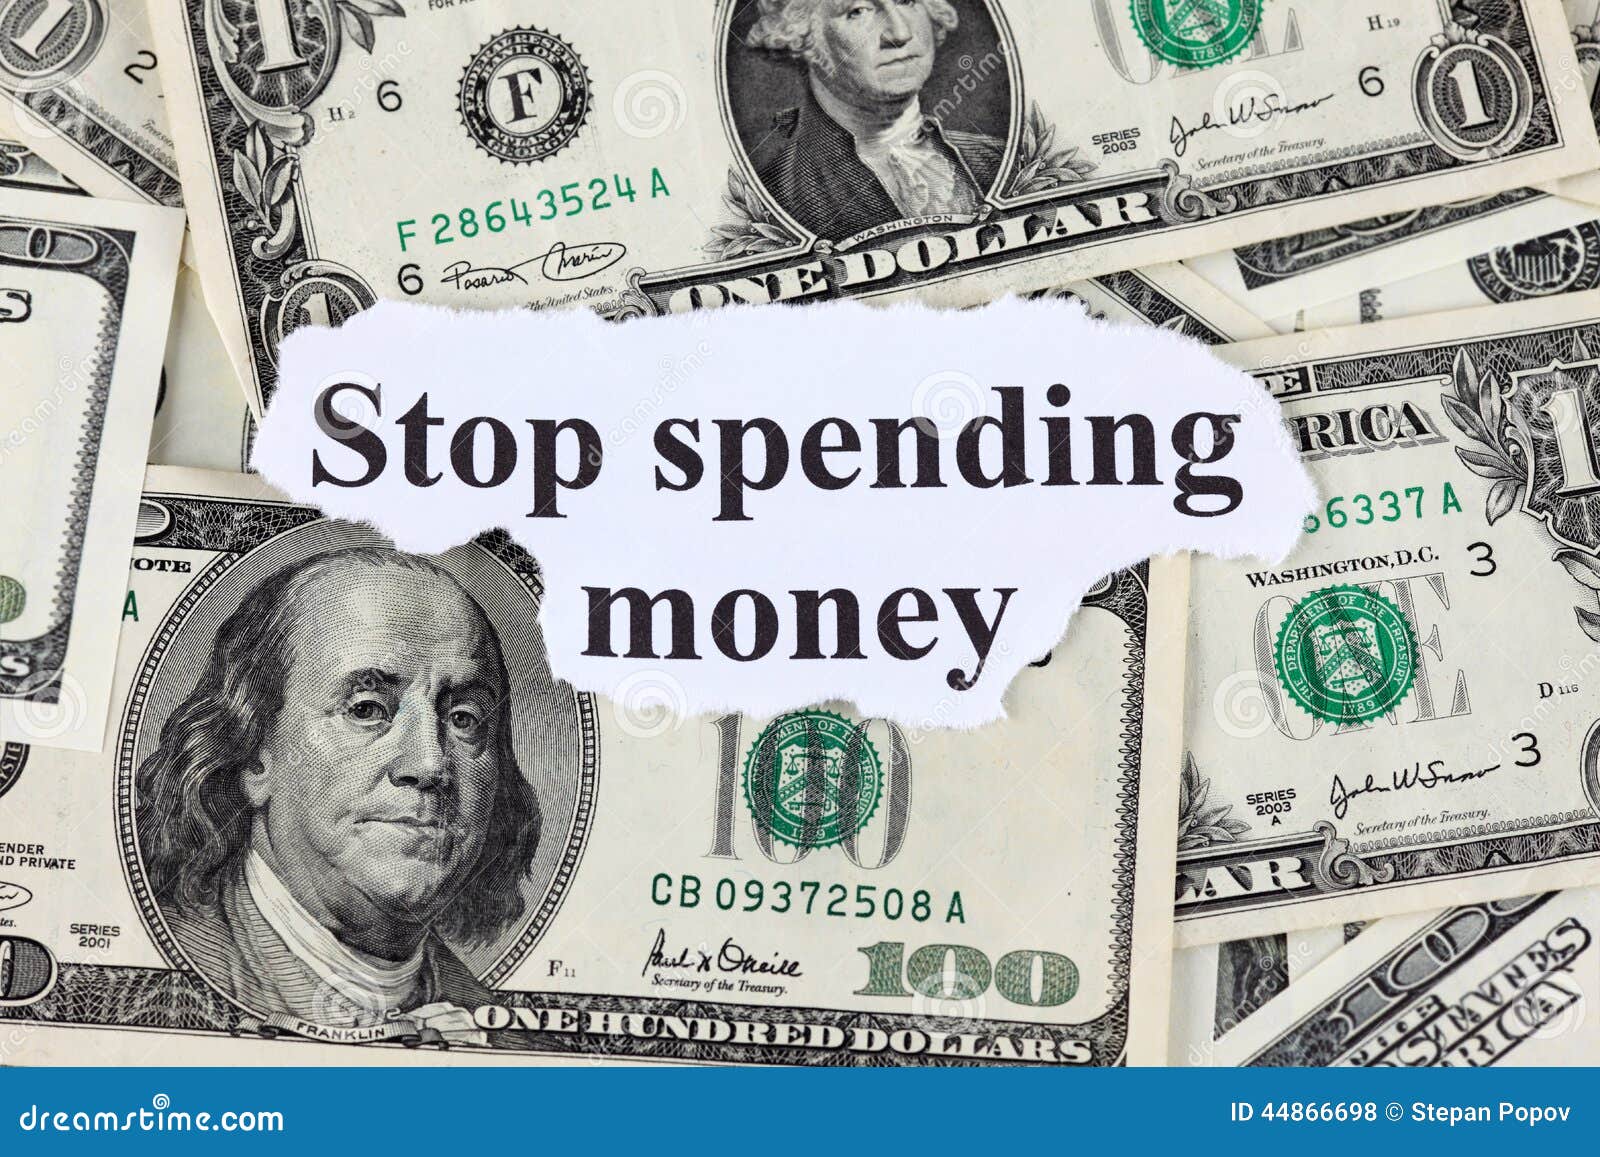 I like spend money. Вашингтон деньги. Stop spending money. Stop spending money illustration. 21 Ways to stop spending money.